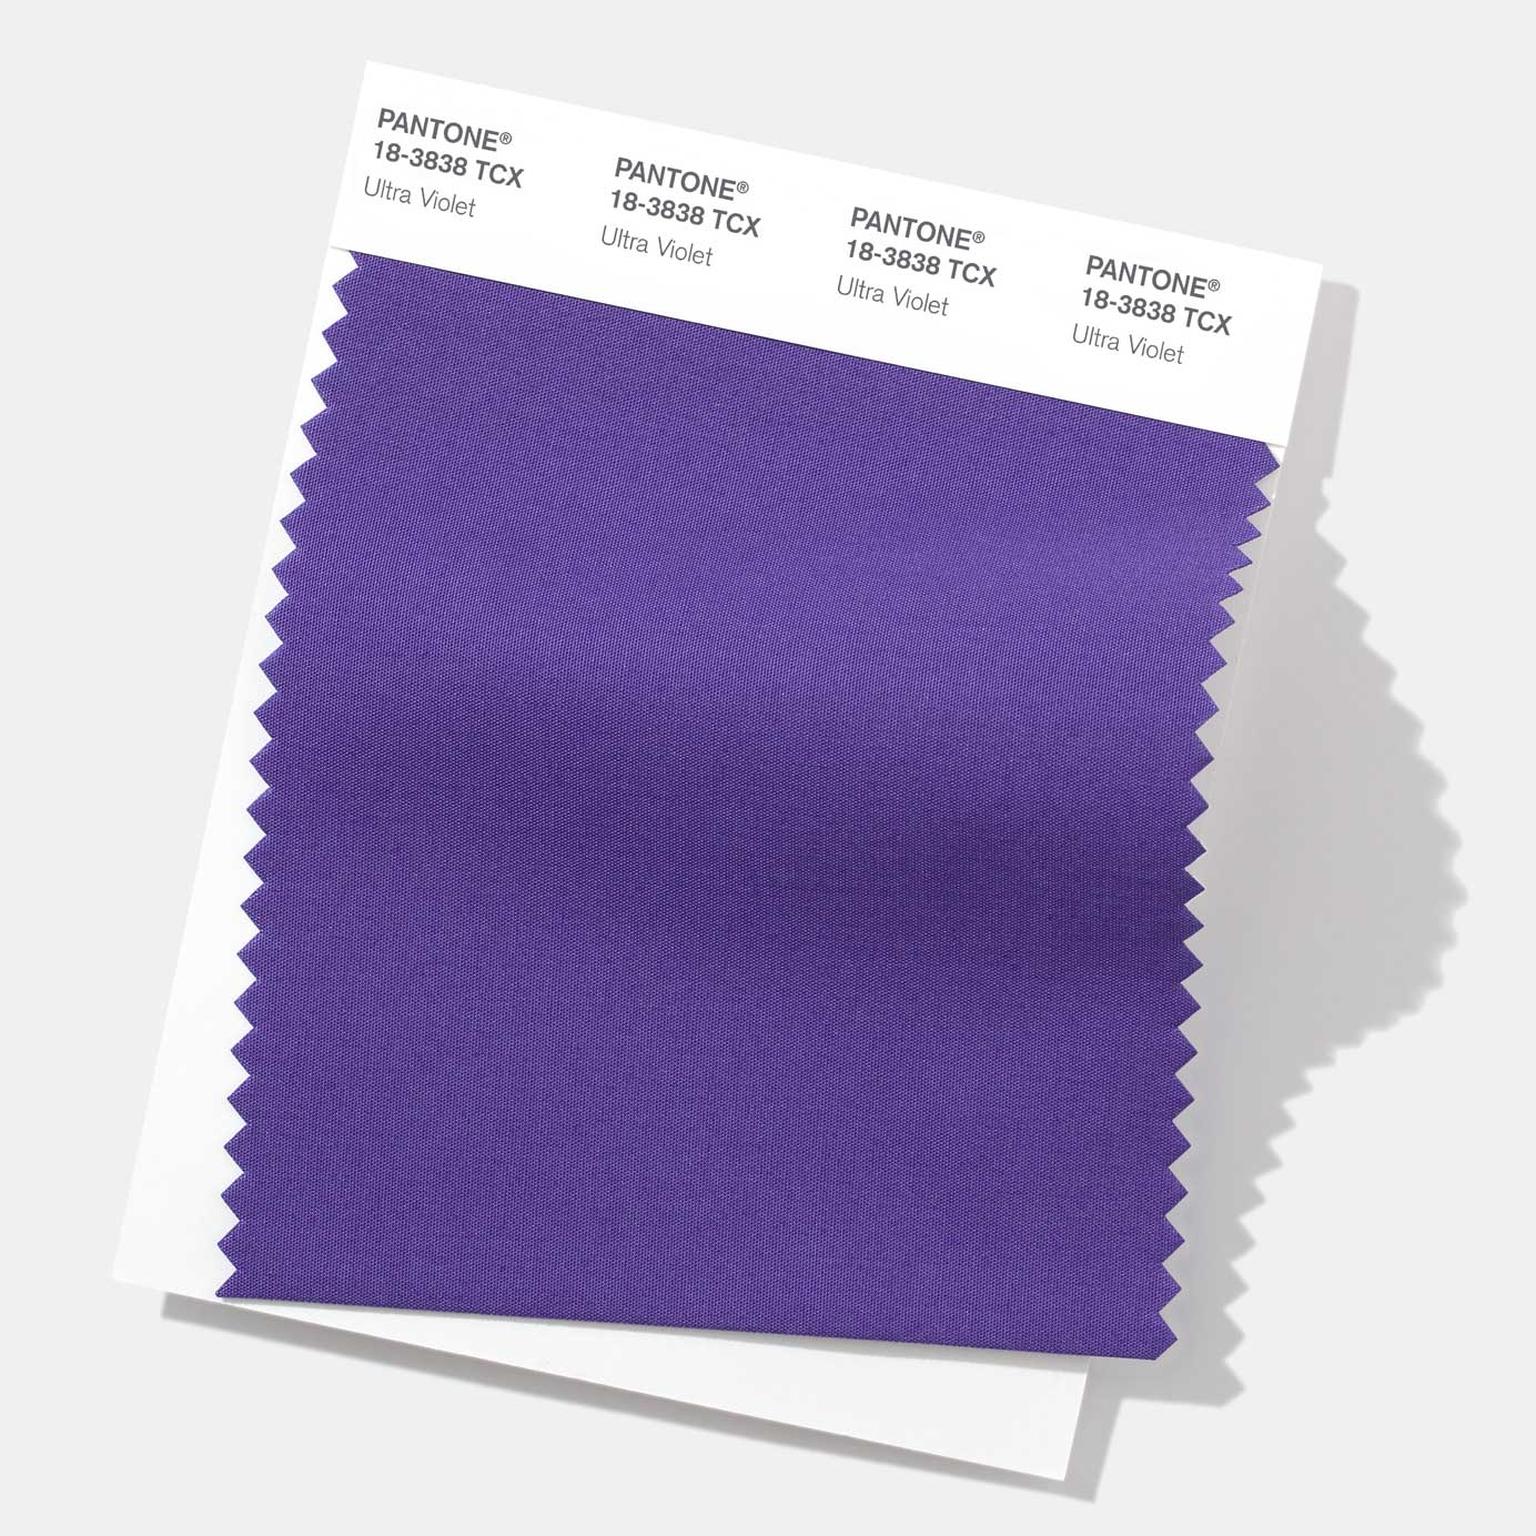 Pantone color 18-3838 Ultra Violet swatch